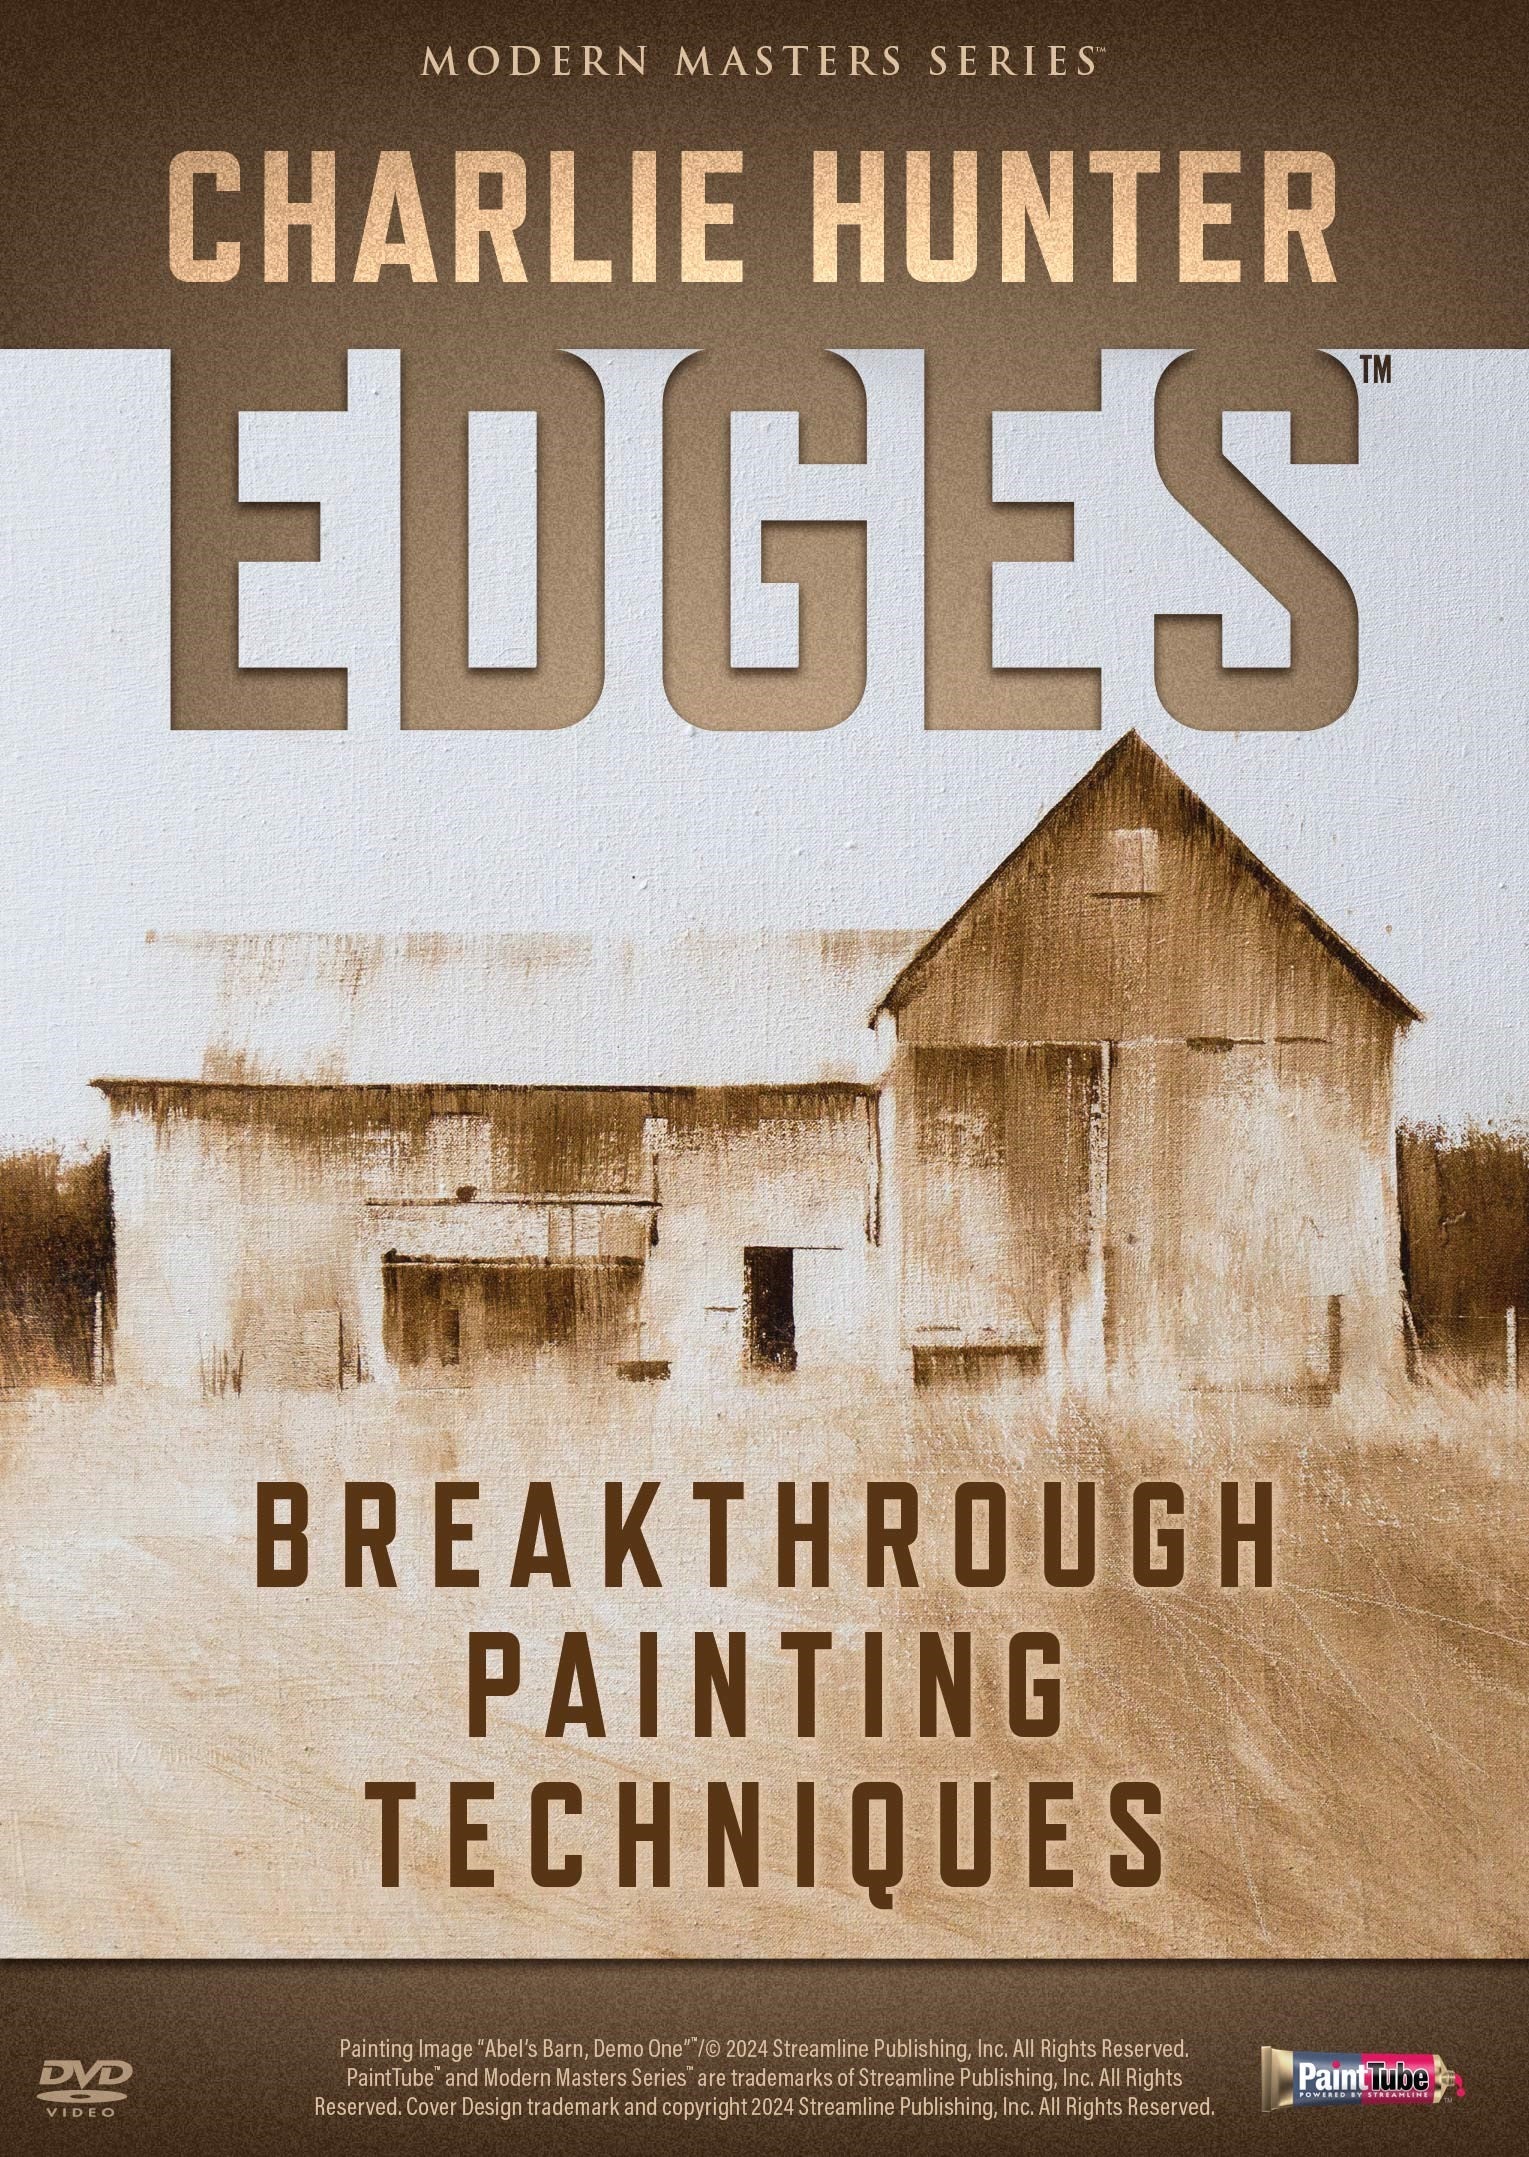 Charlie Hunter: EDGES - Breakthrough Painting Techniques